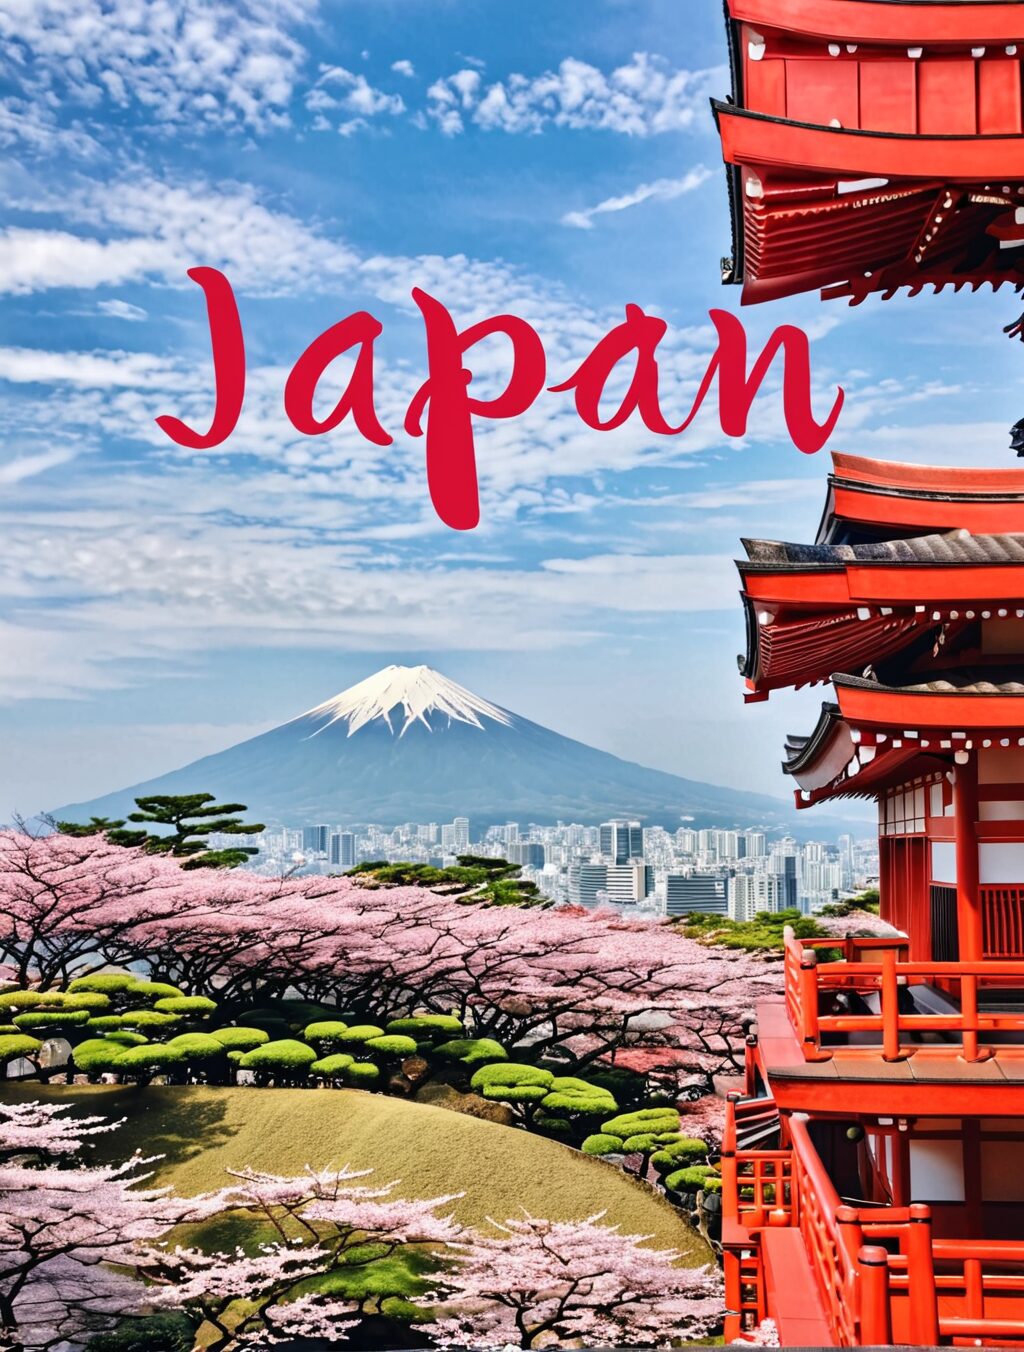 one week japan itinerary